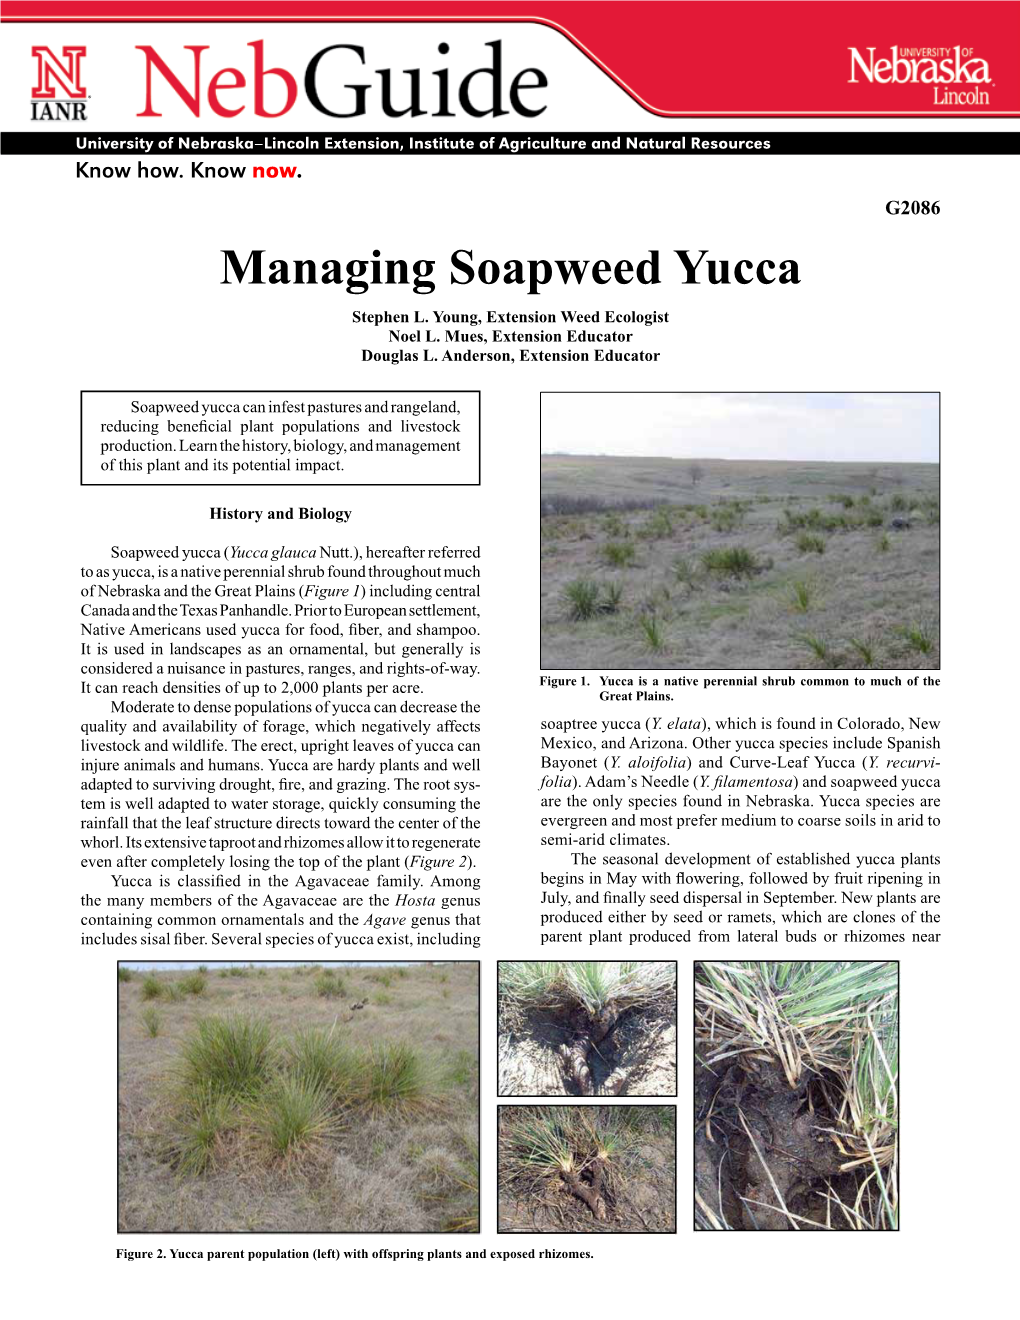 Managing Soapweed Yucca Stephen L